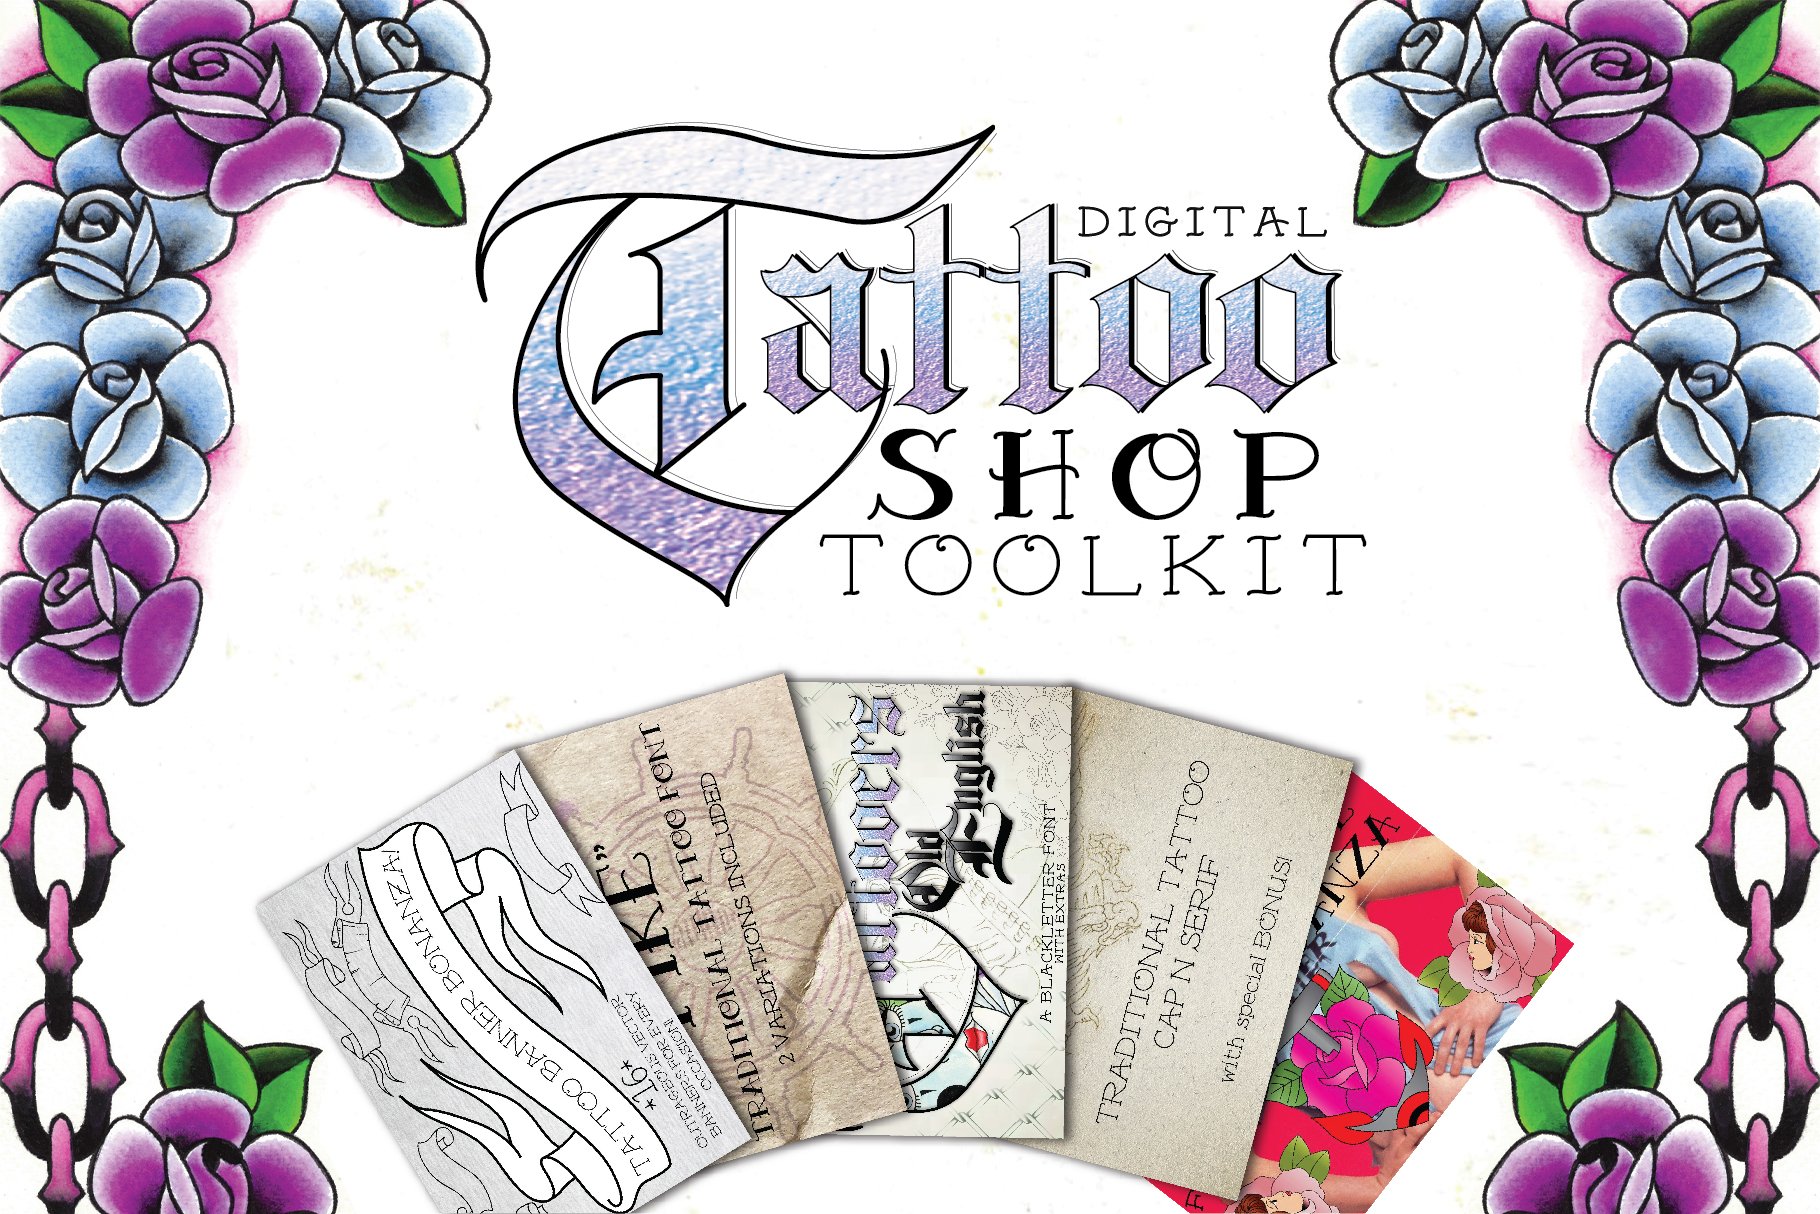 Digital Tattoo Shop Toolkit Bundle cover image.